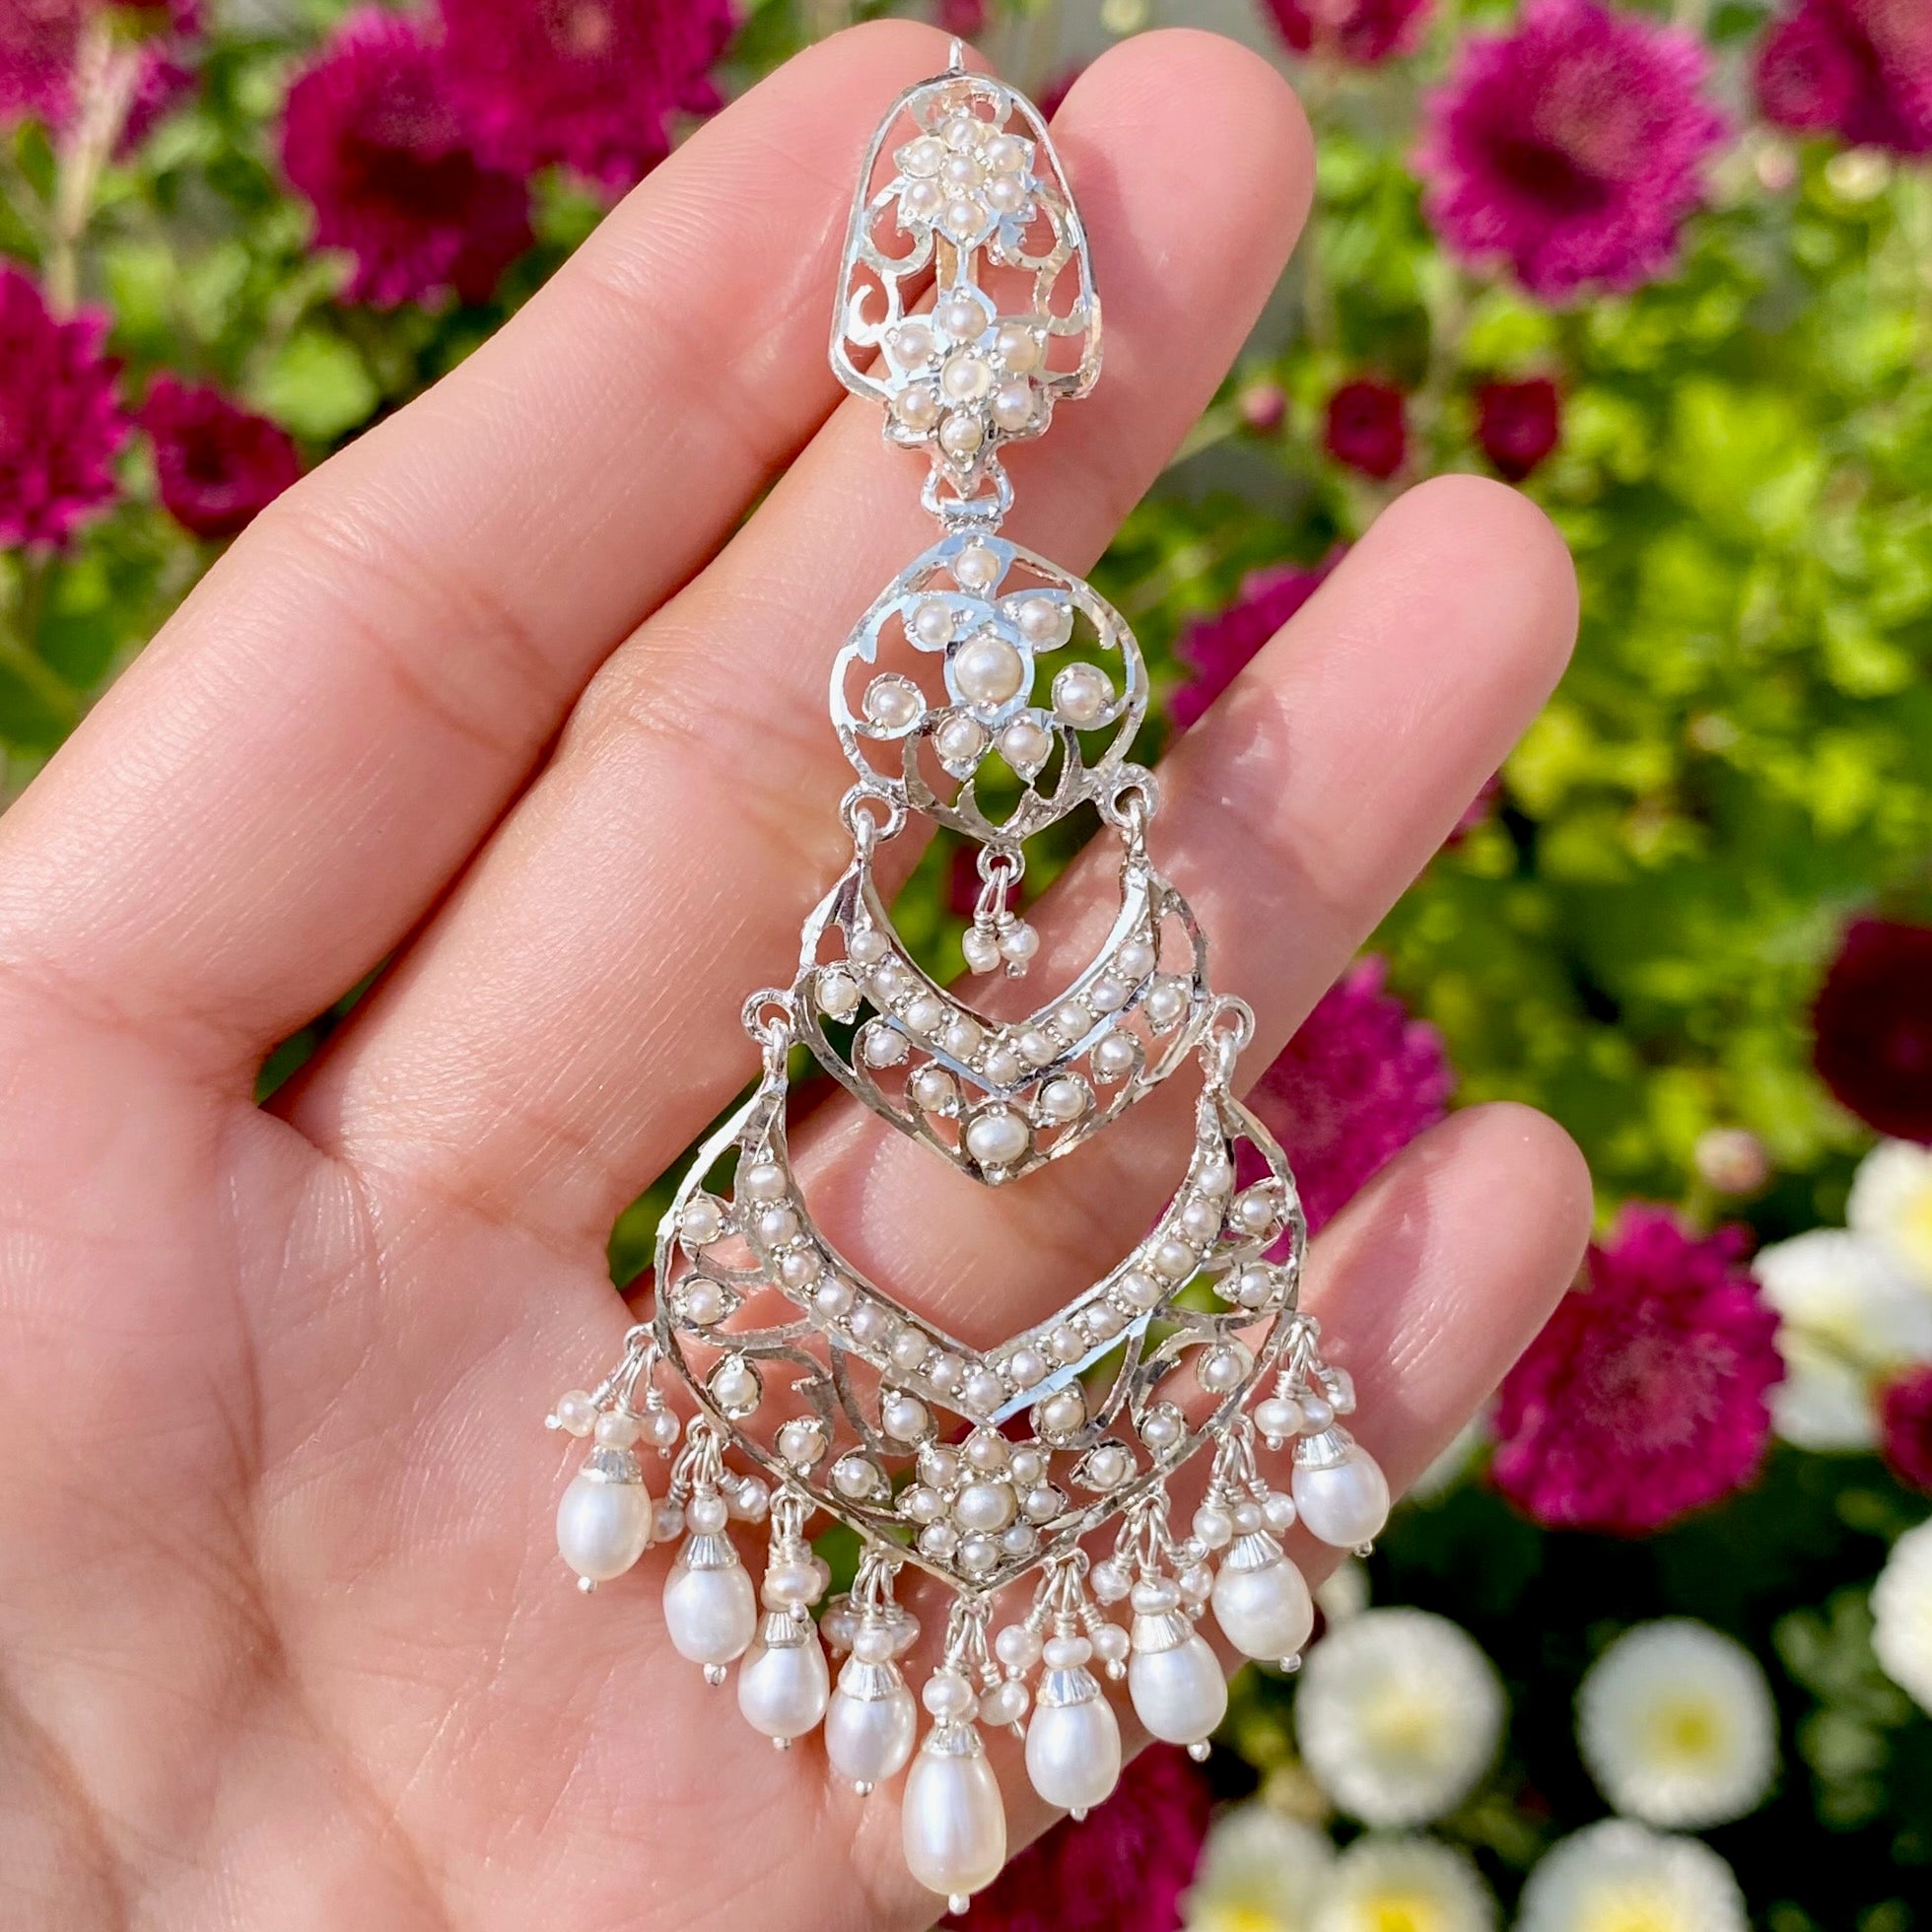 Ethnic Classy sterling silver gemstone chandelier earrings at ₹4550 | Azilaa